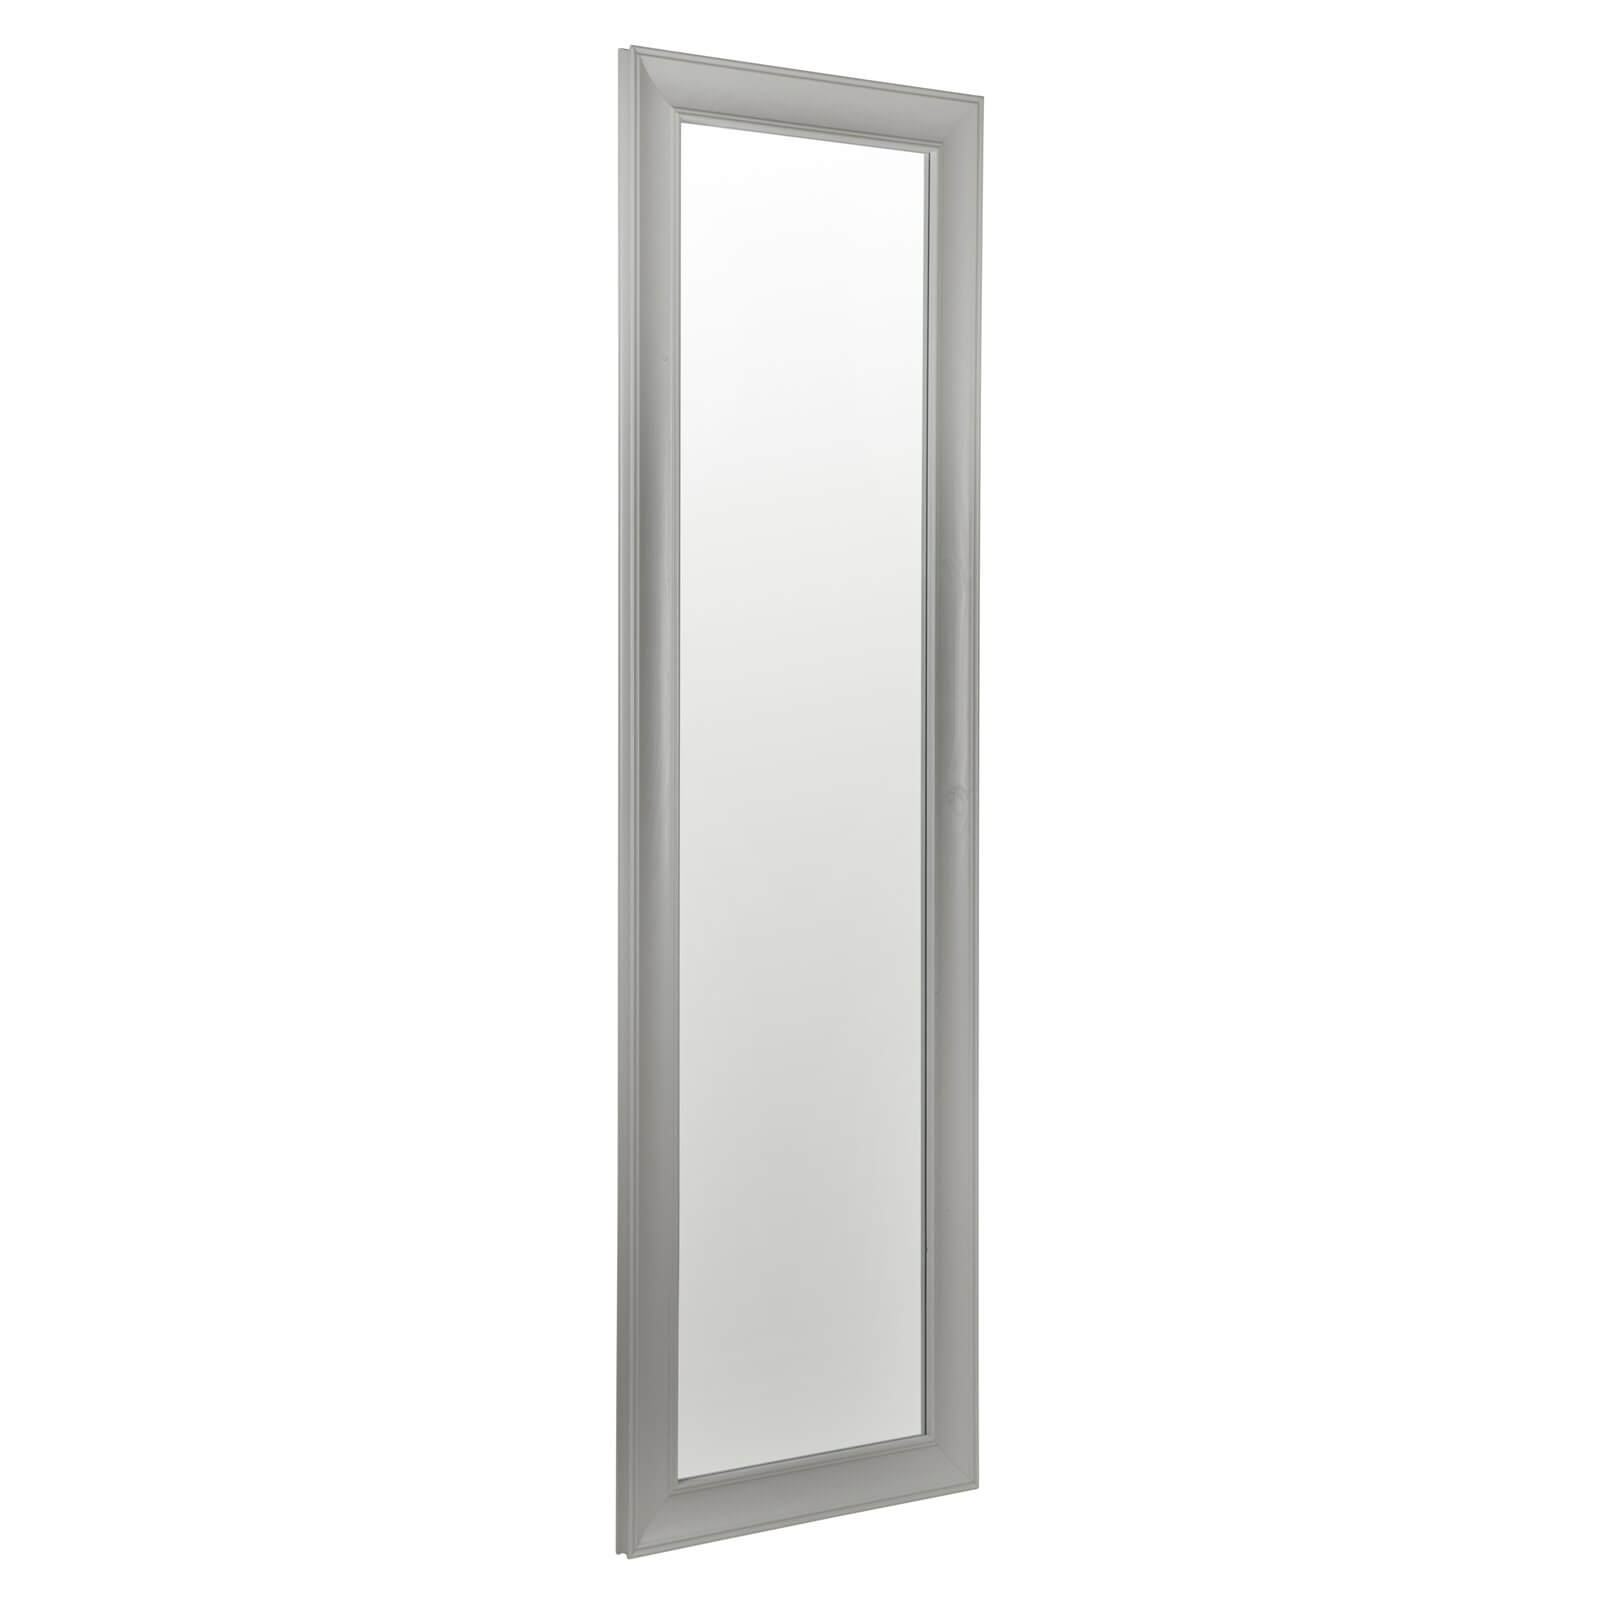 Coldrake Framed Mirror Grey Wood Full Length 41x131cm